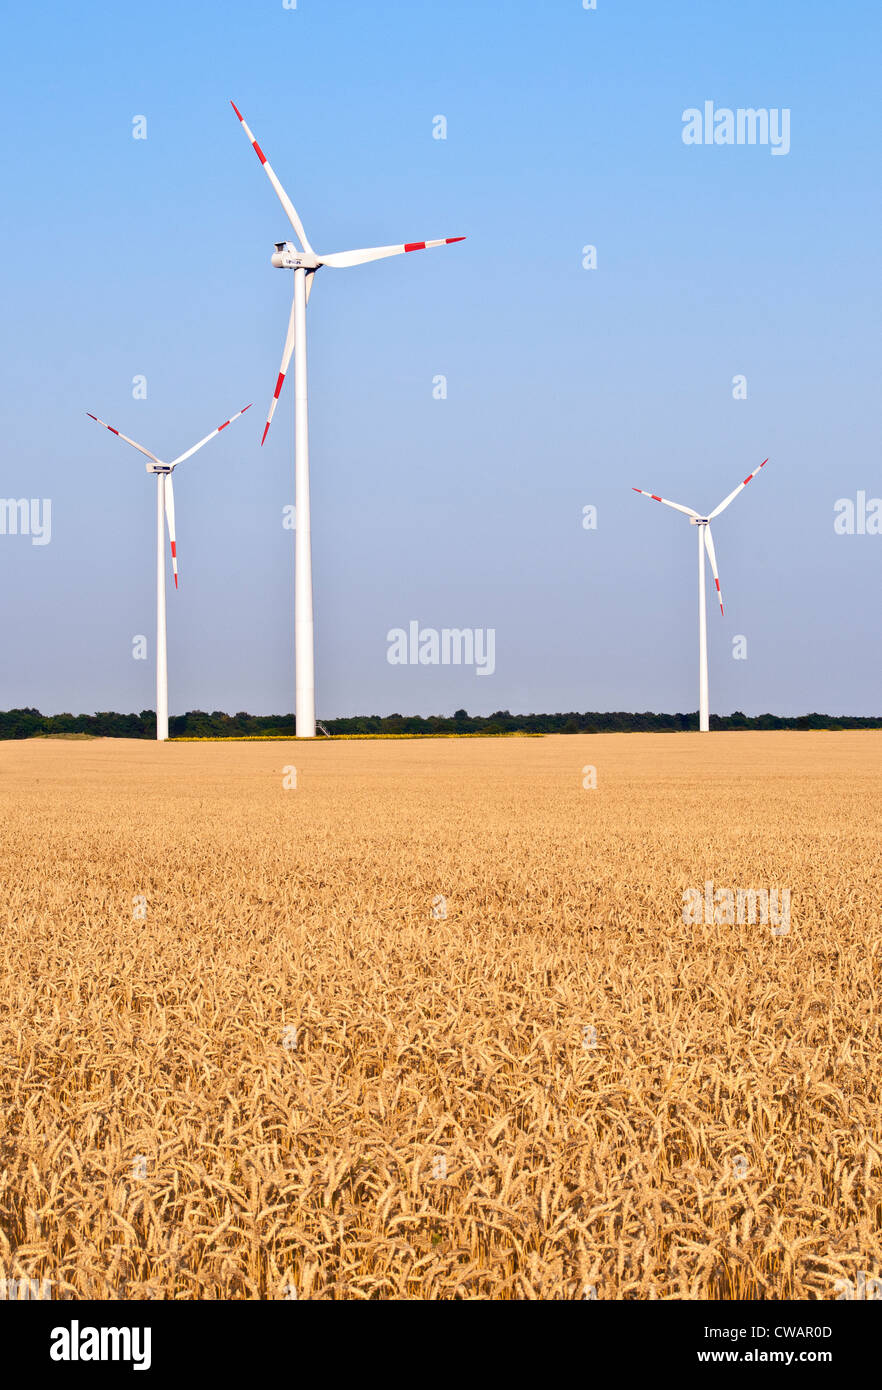 Wind turbines farm in a wheat field Stock Photo